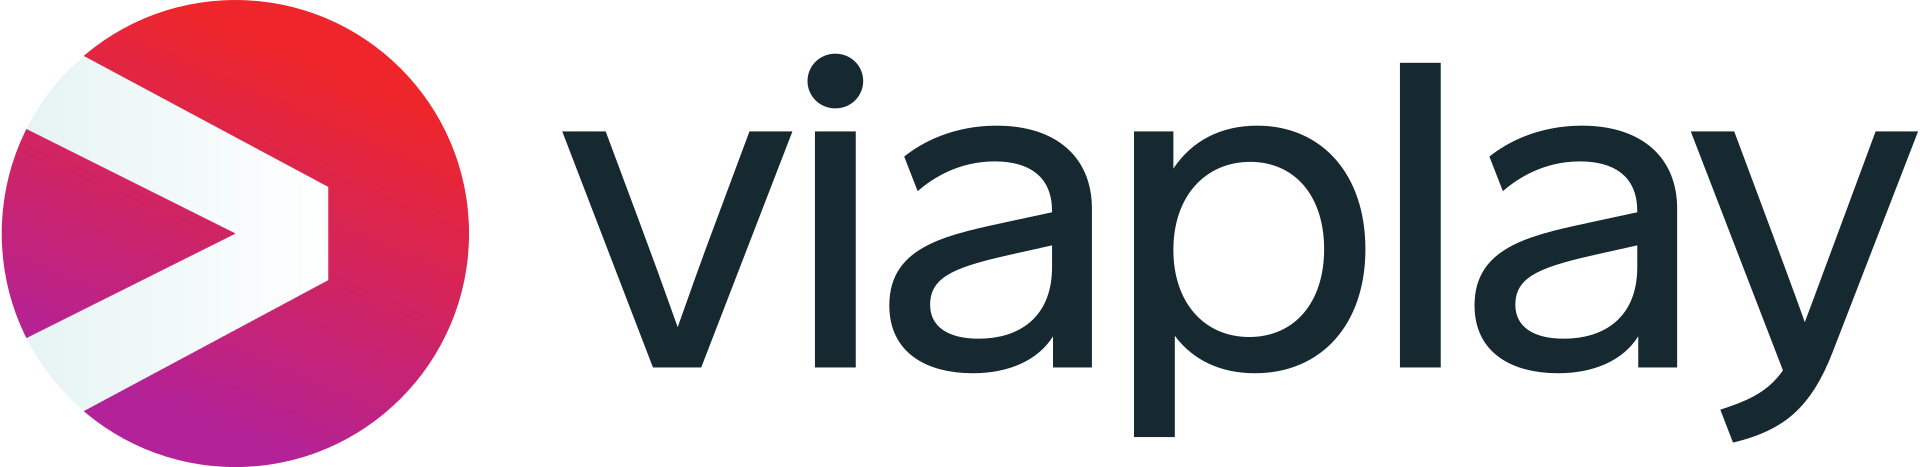 Viaplay Brand Logo